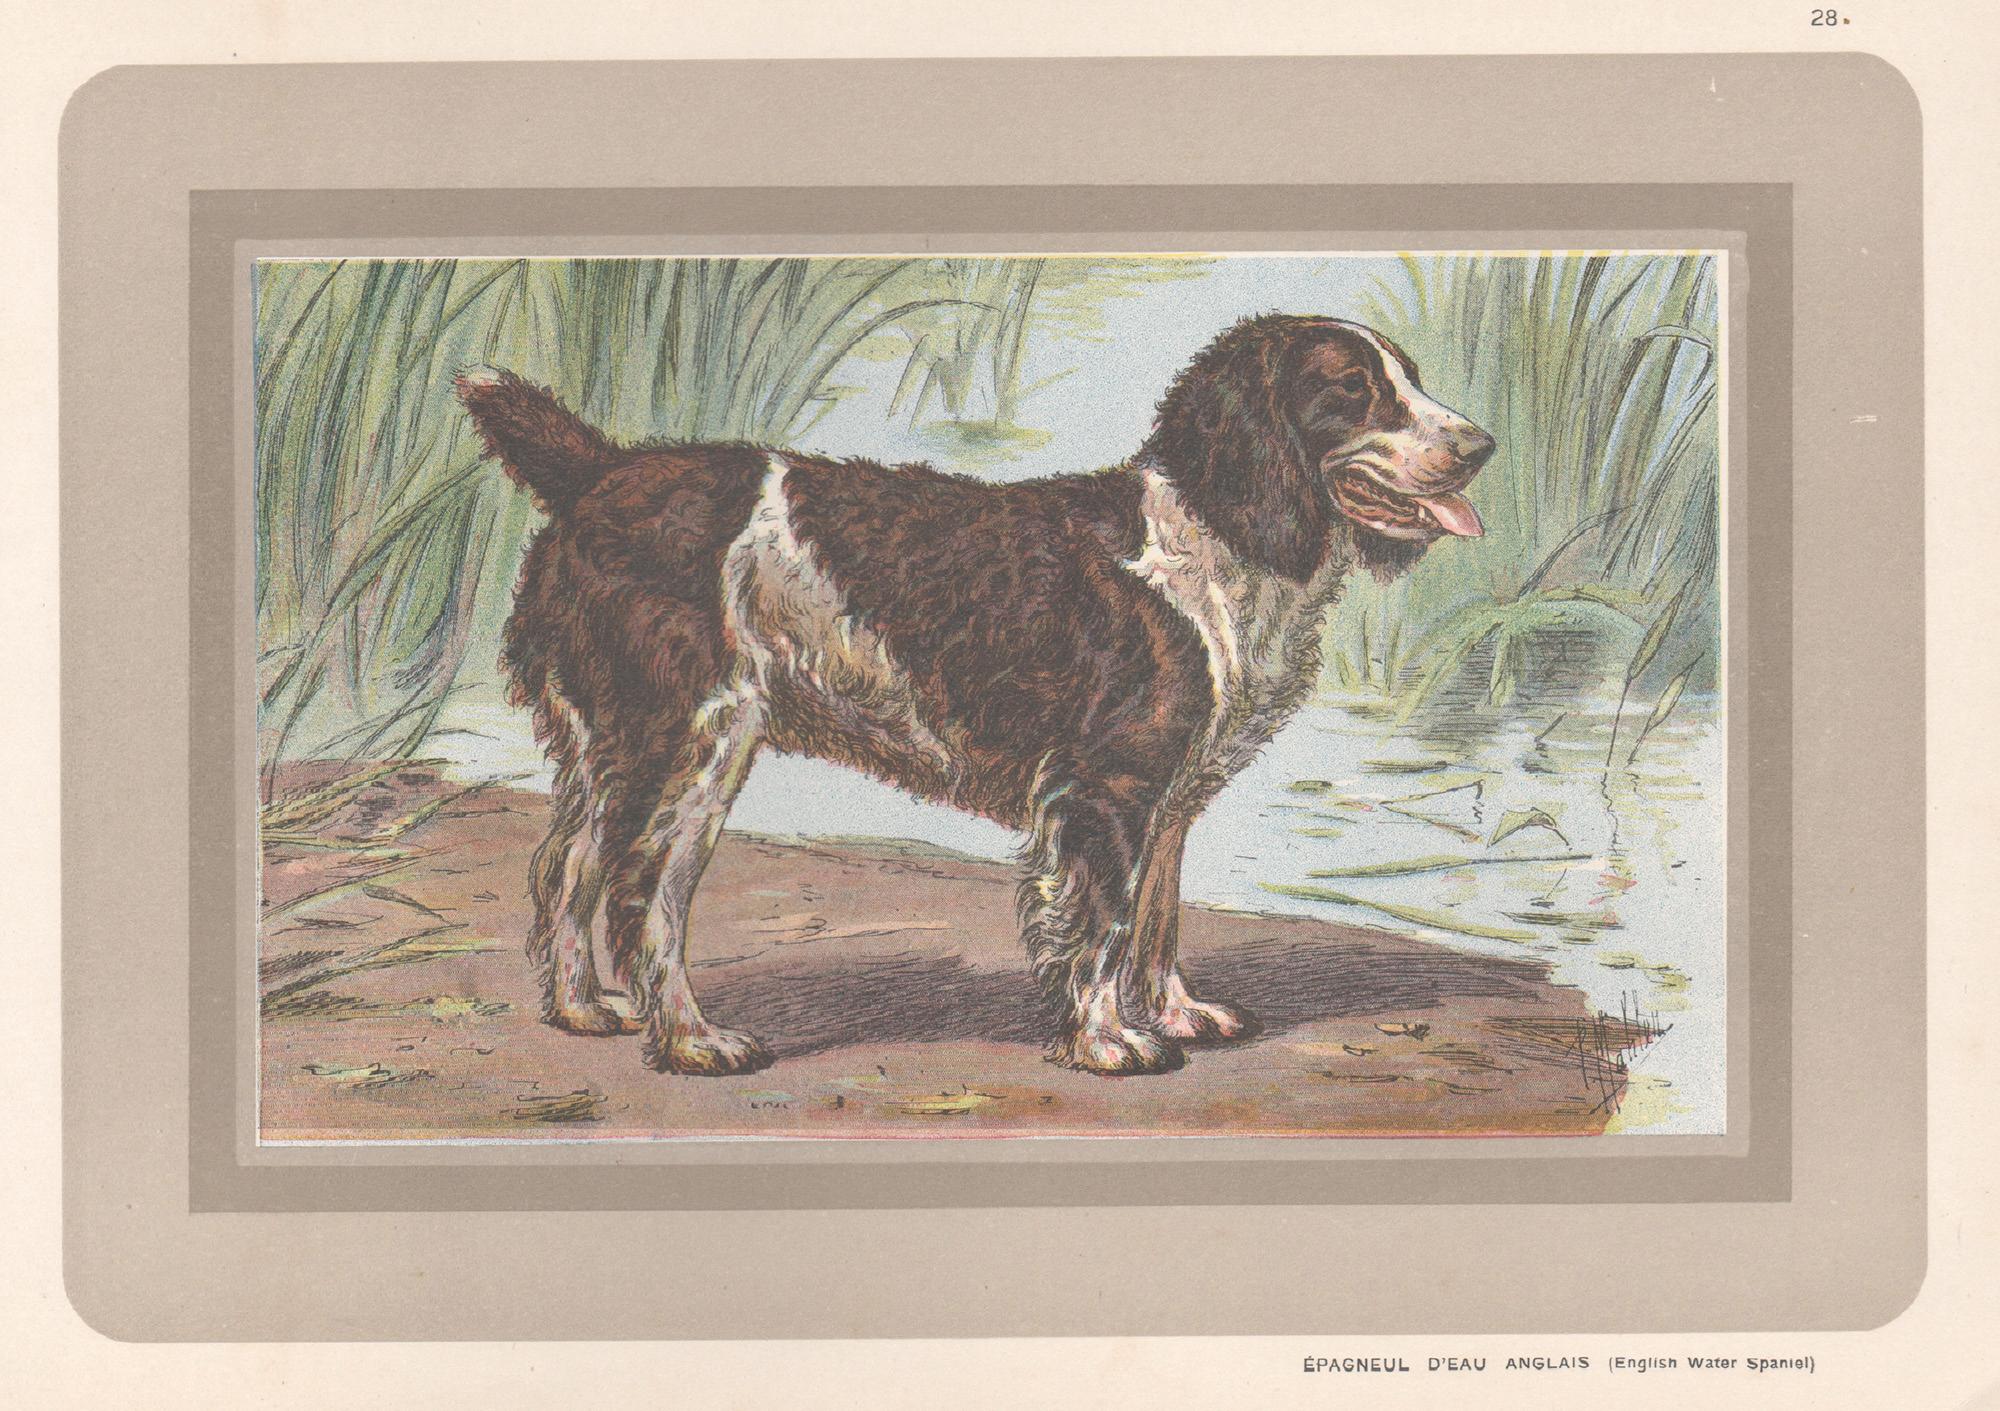 P. Mahler Animal Print - English Water Spaniel, French hound dog chromolithograph print, 1931